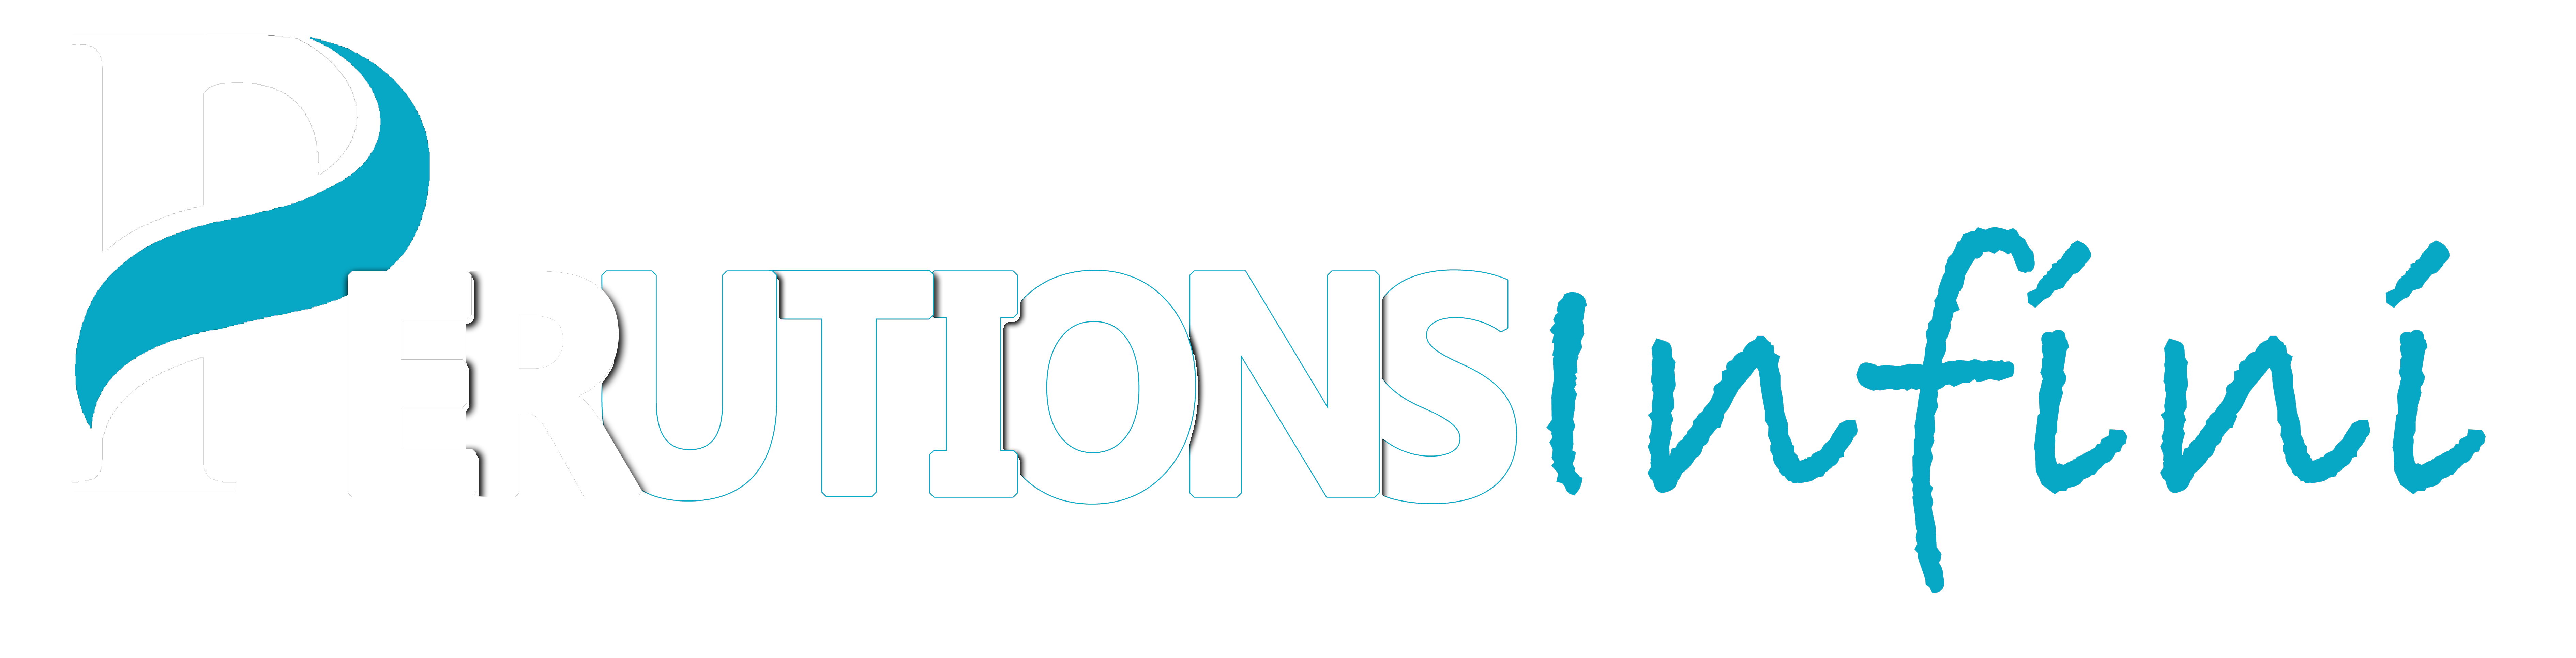 Perutions Light Logo